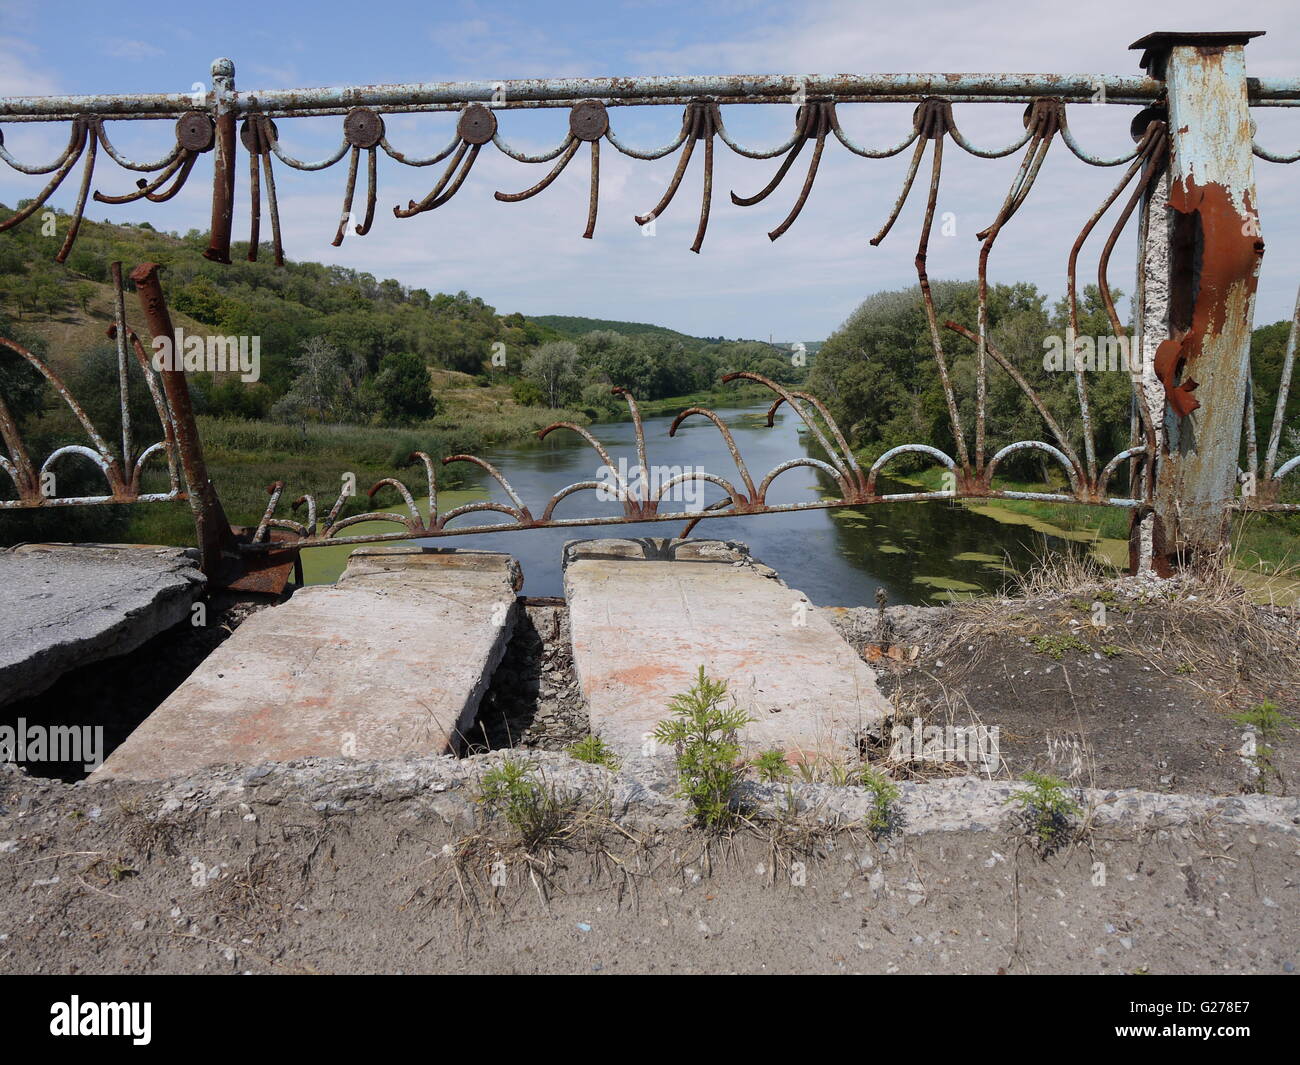 Severe bombing in east of Ukraine causes destruction on a bridge near Donetsk Stock Photo